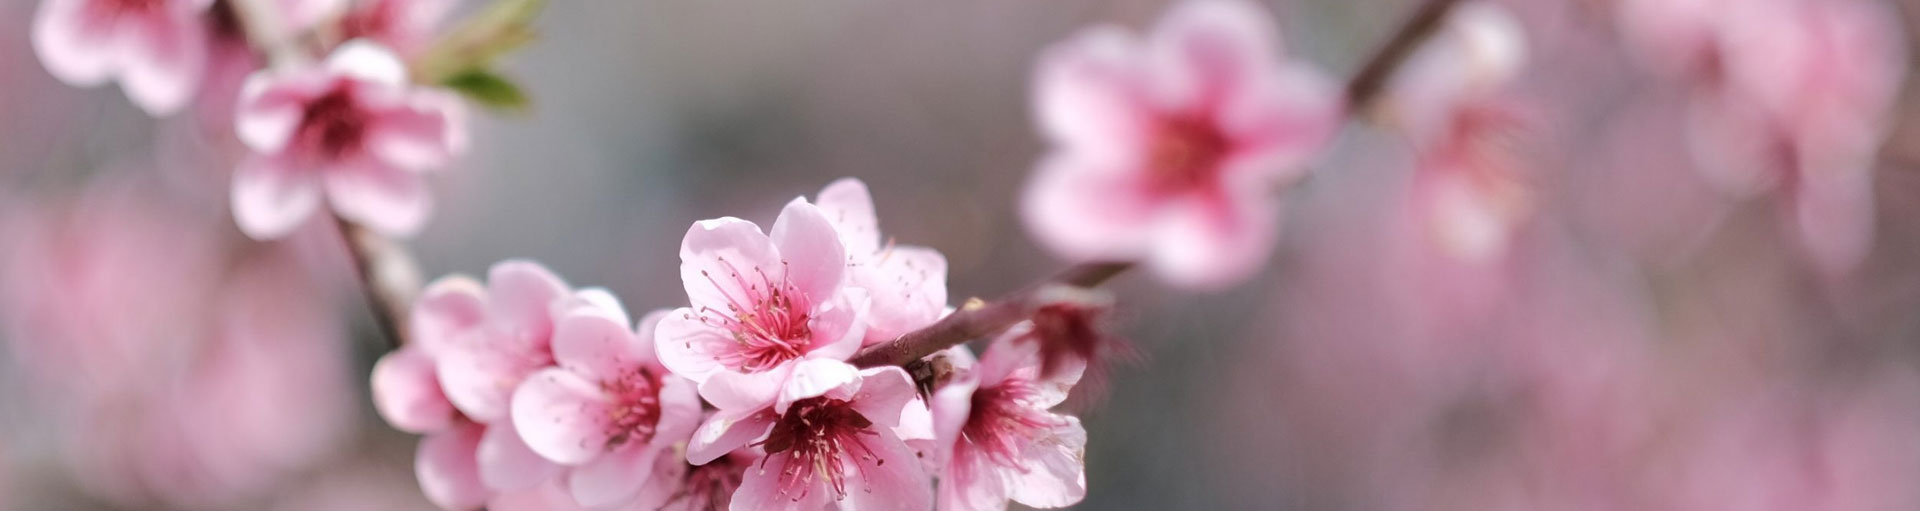 Hamilton East Mindfulness Community, pink blossom